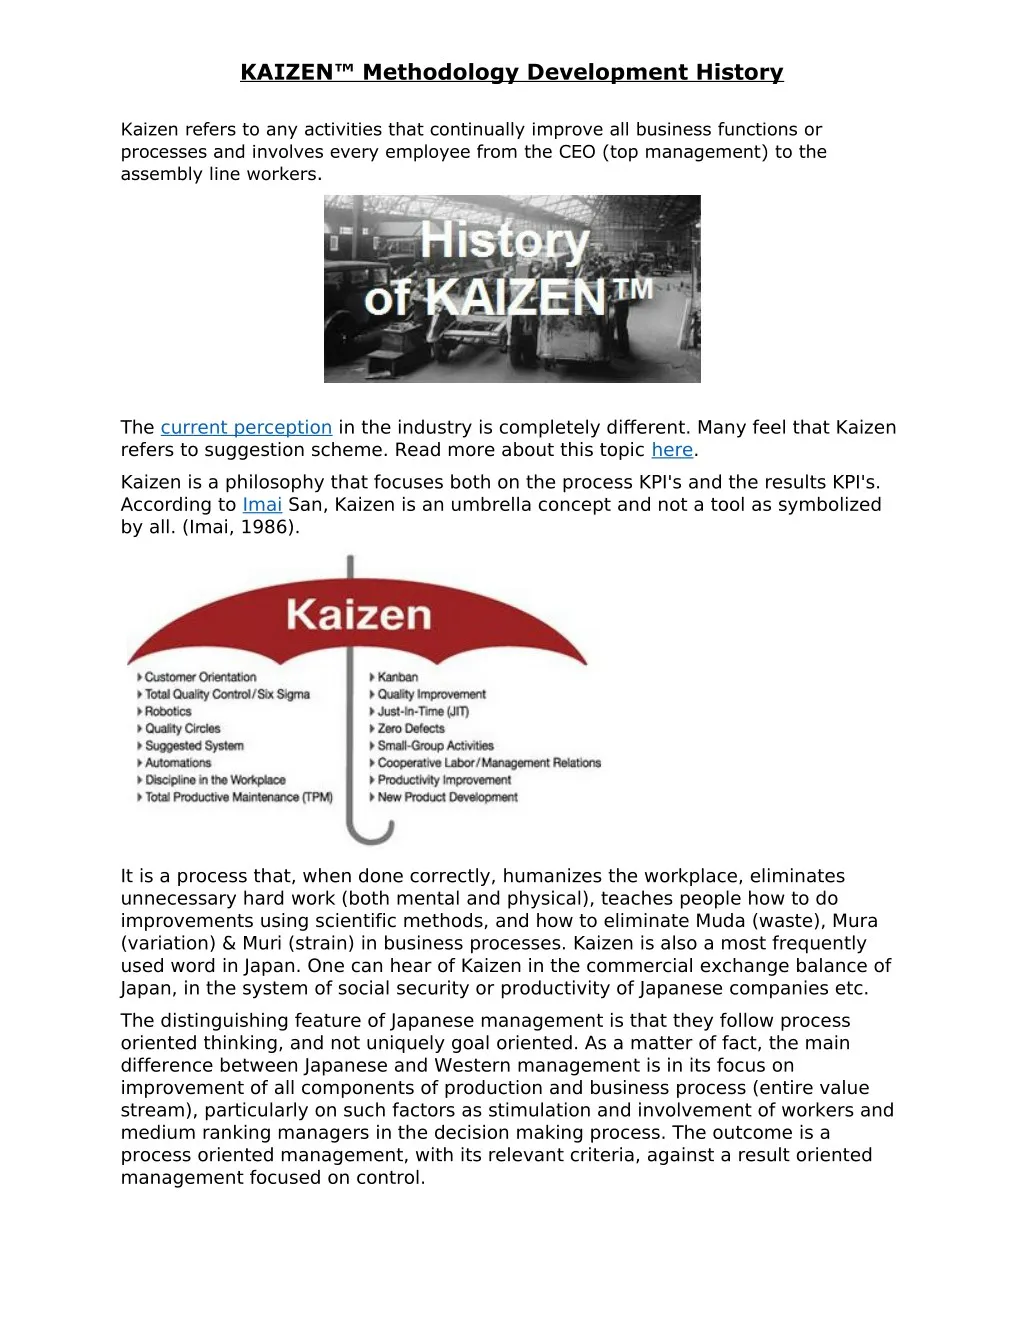 kaizen methodology development history